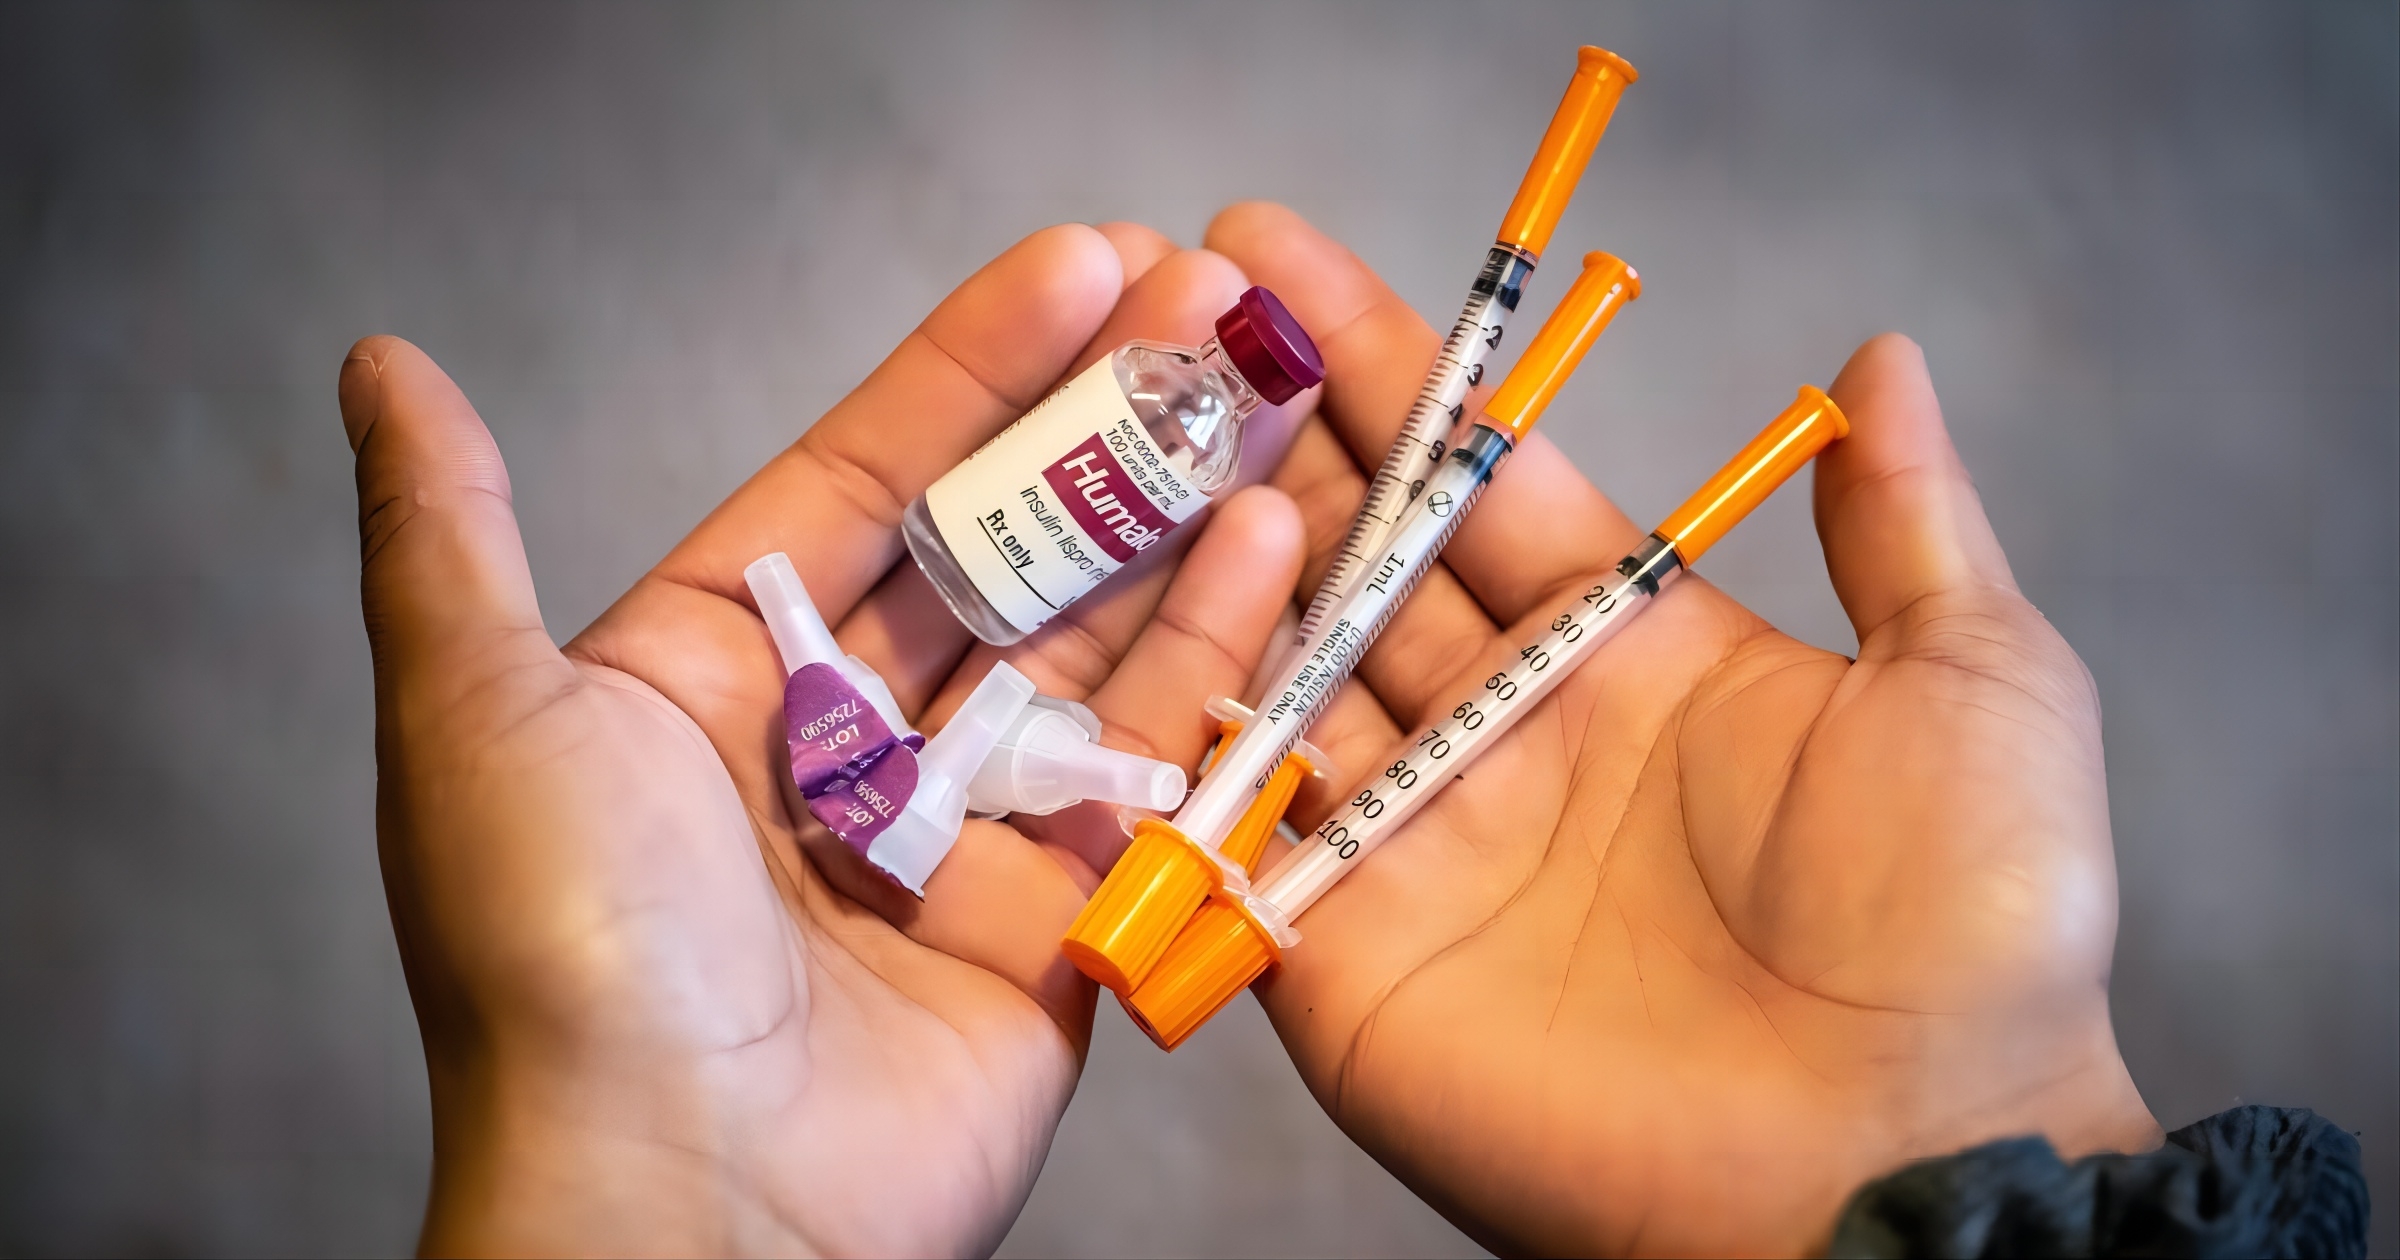 insulin syringe